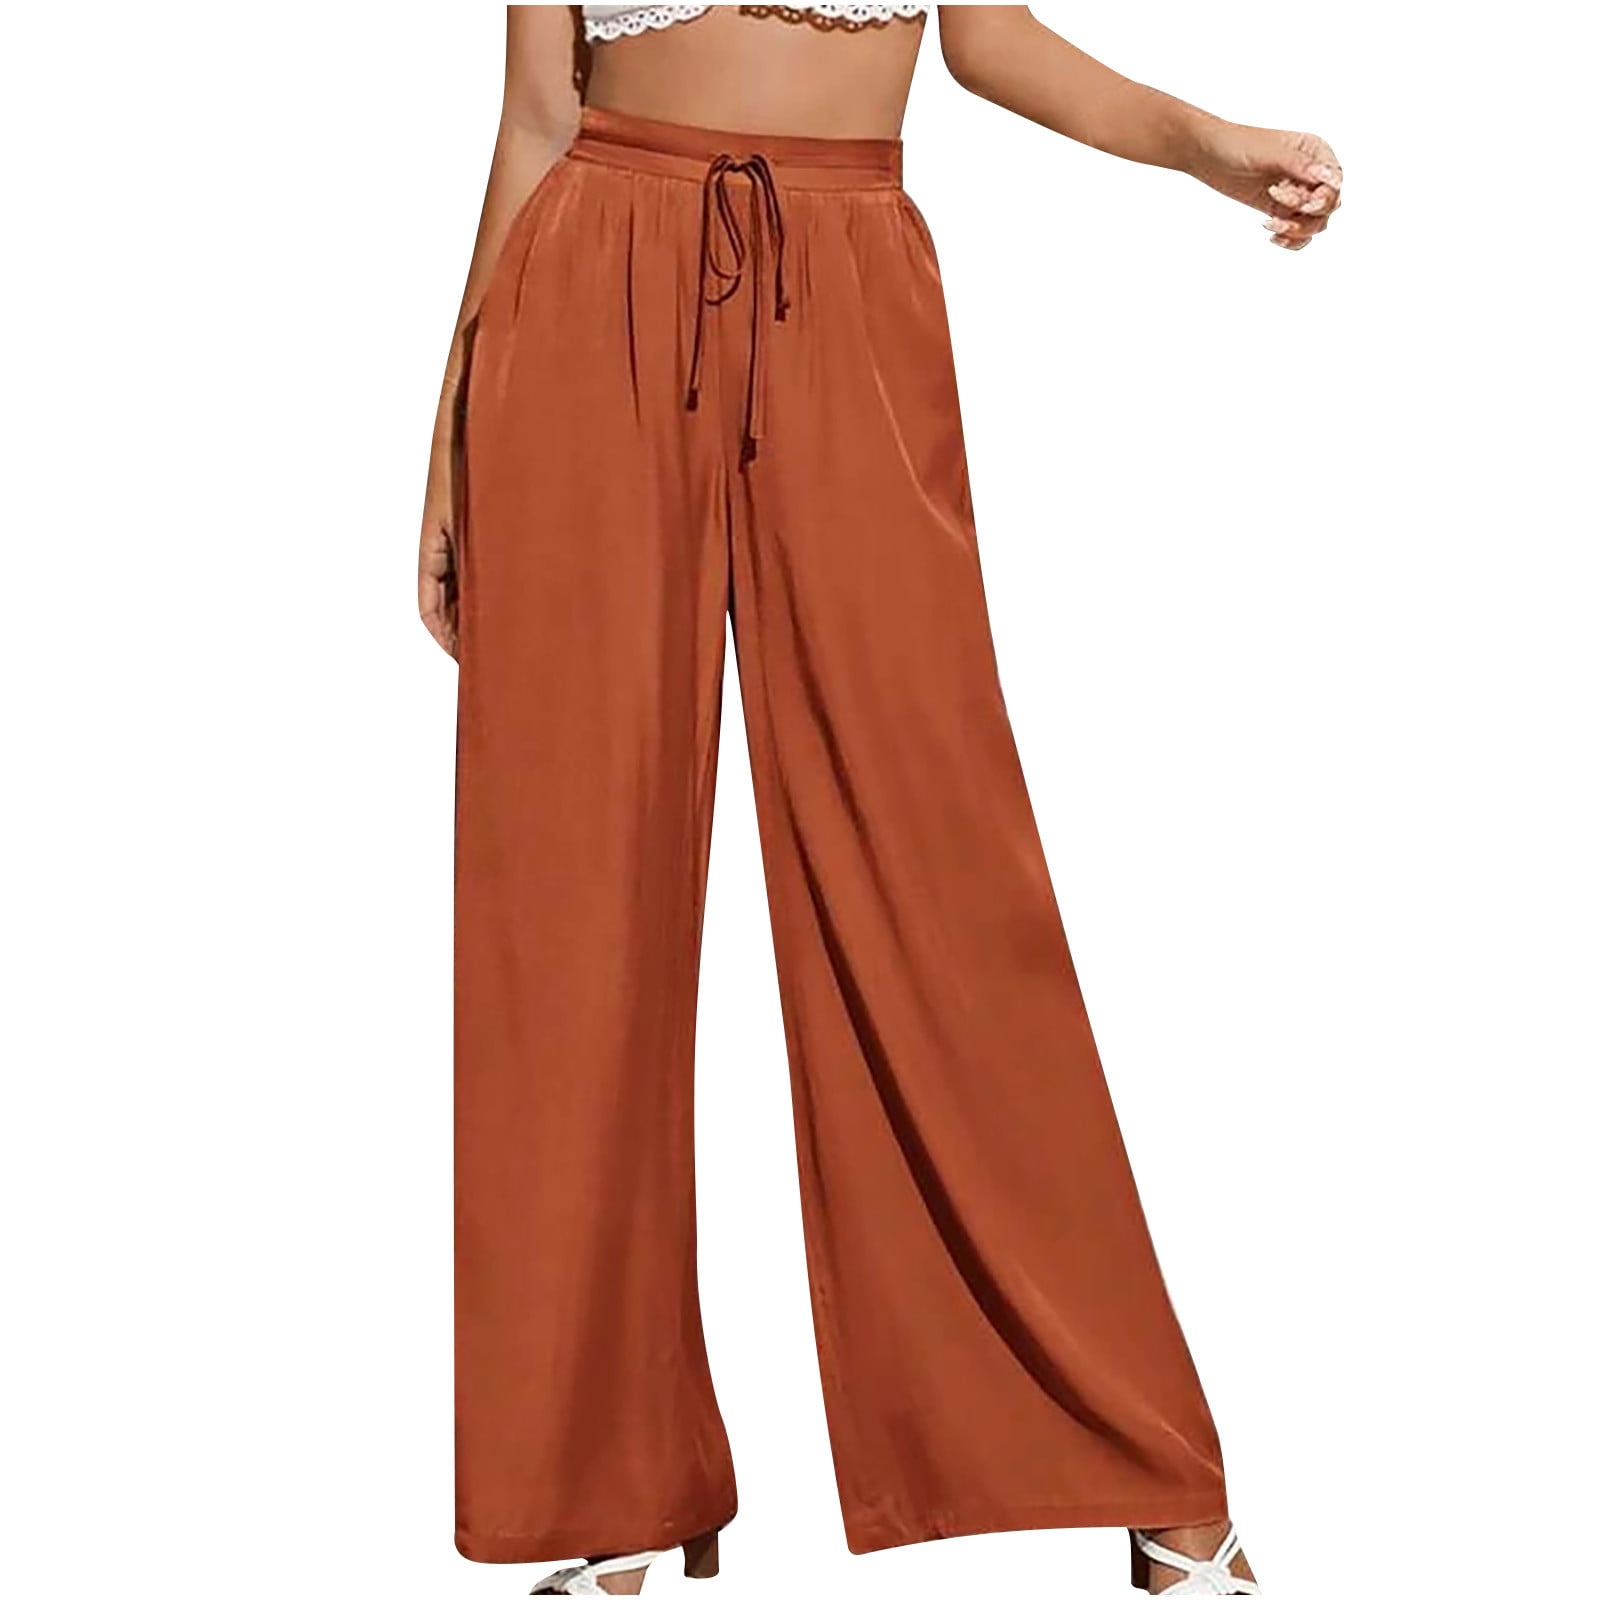 Bigersell Curvy Pants for Women Full Length Pants Fashion Women